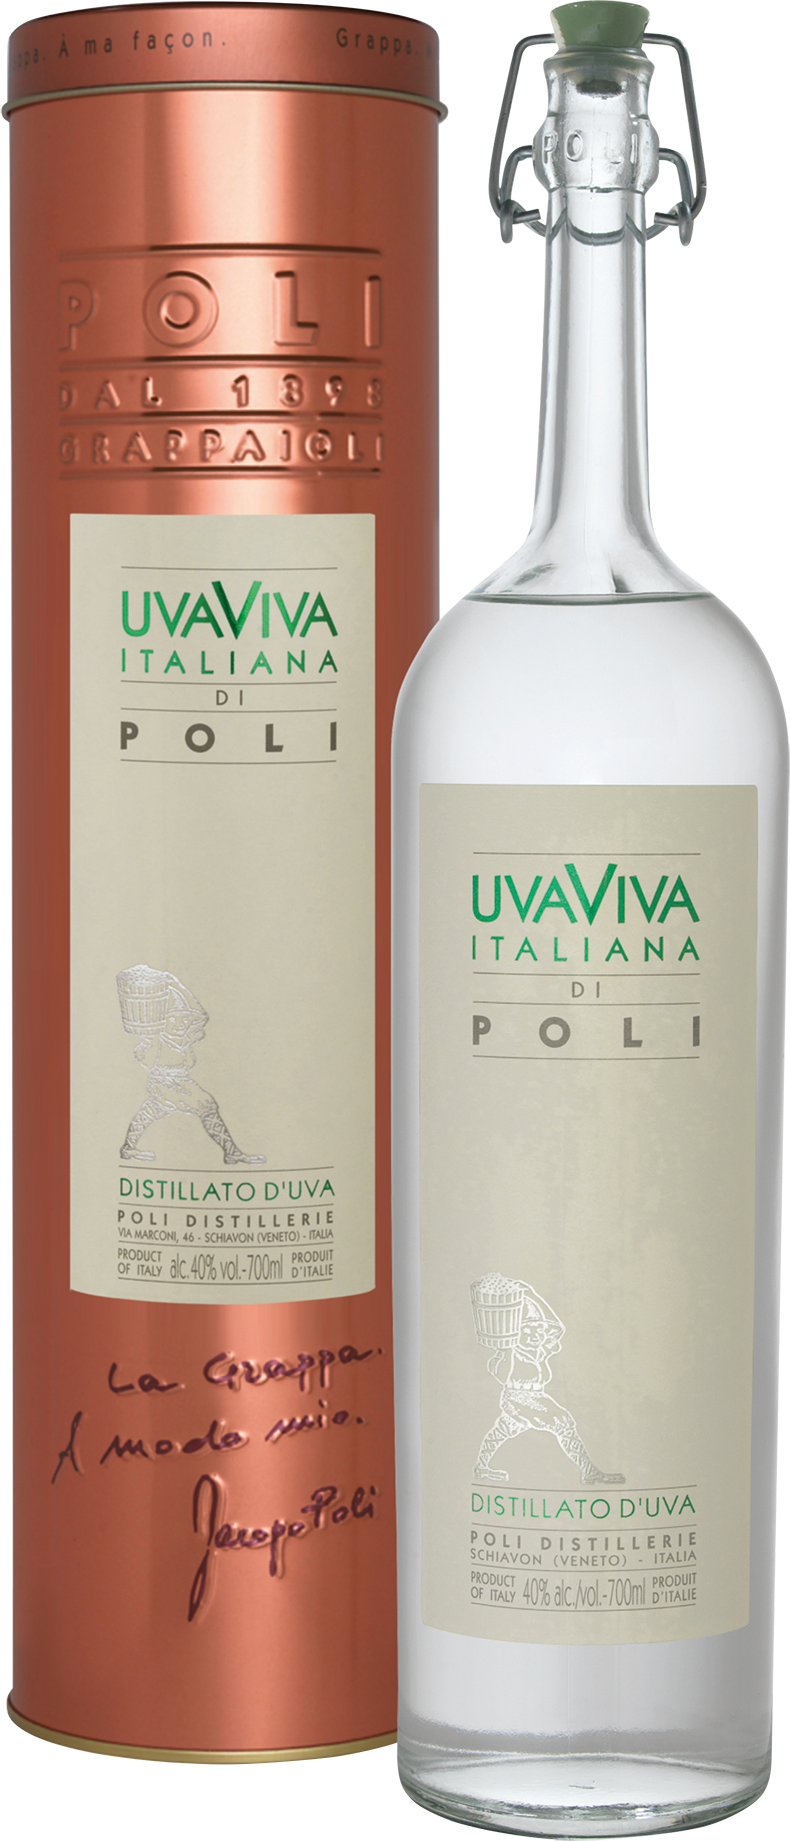 UvaViva Italiana di Poli